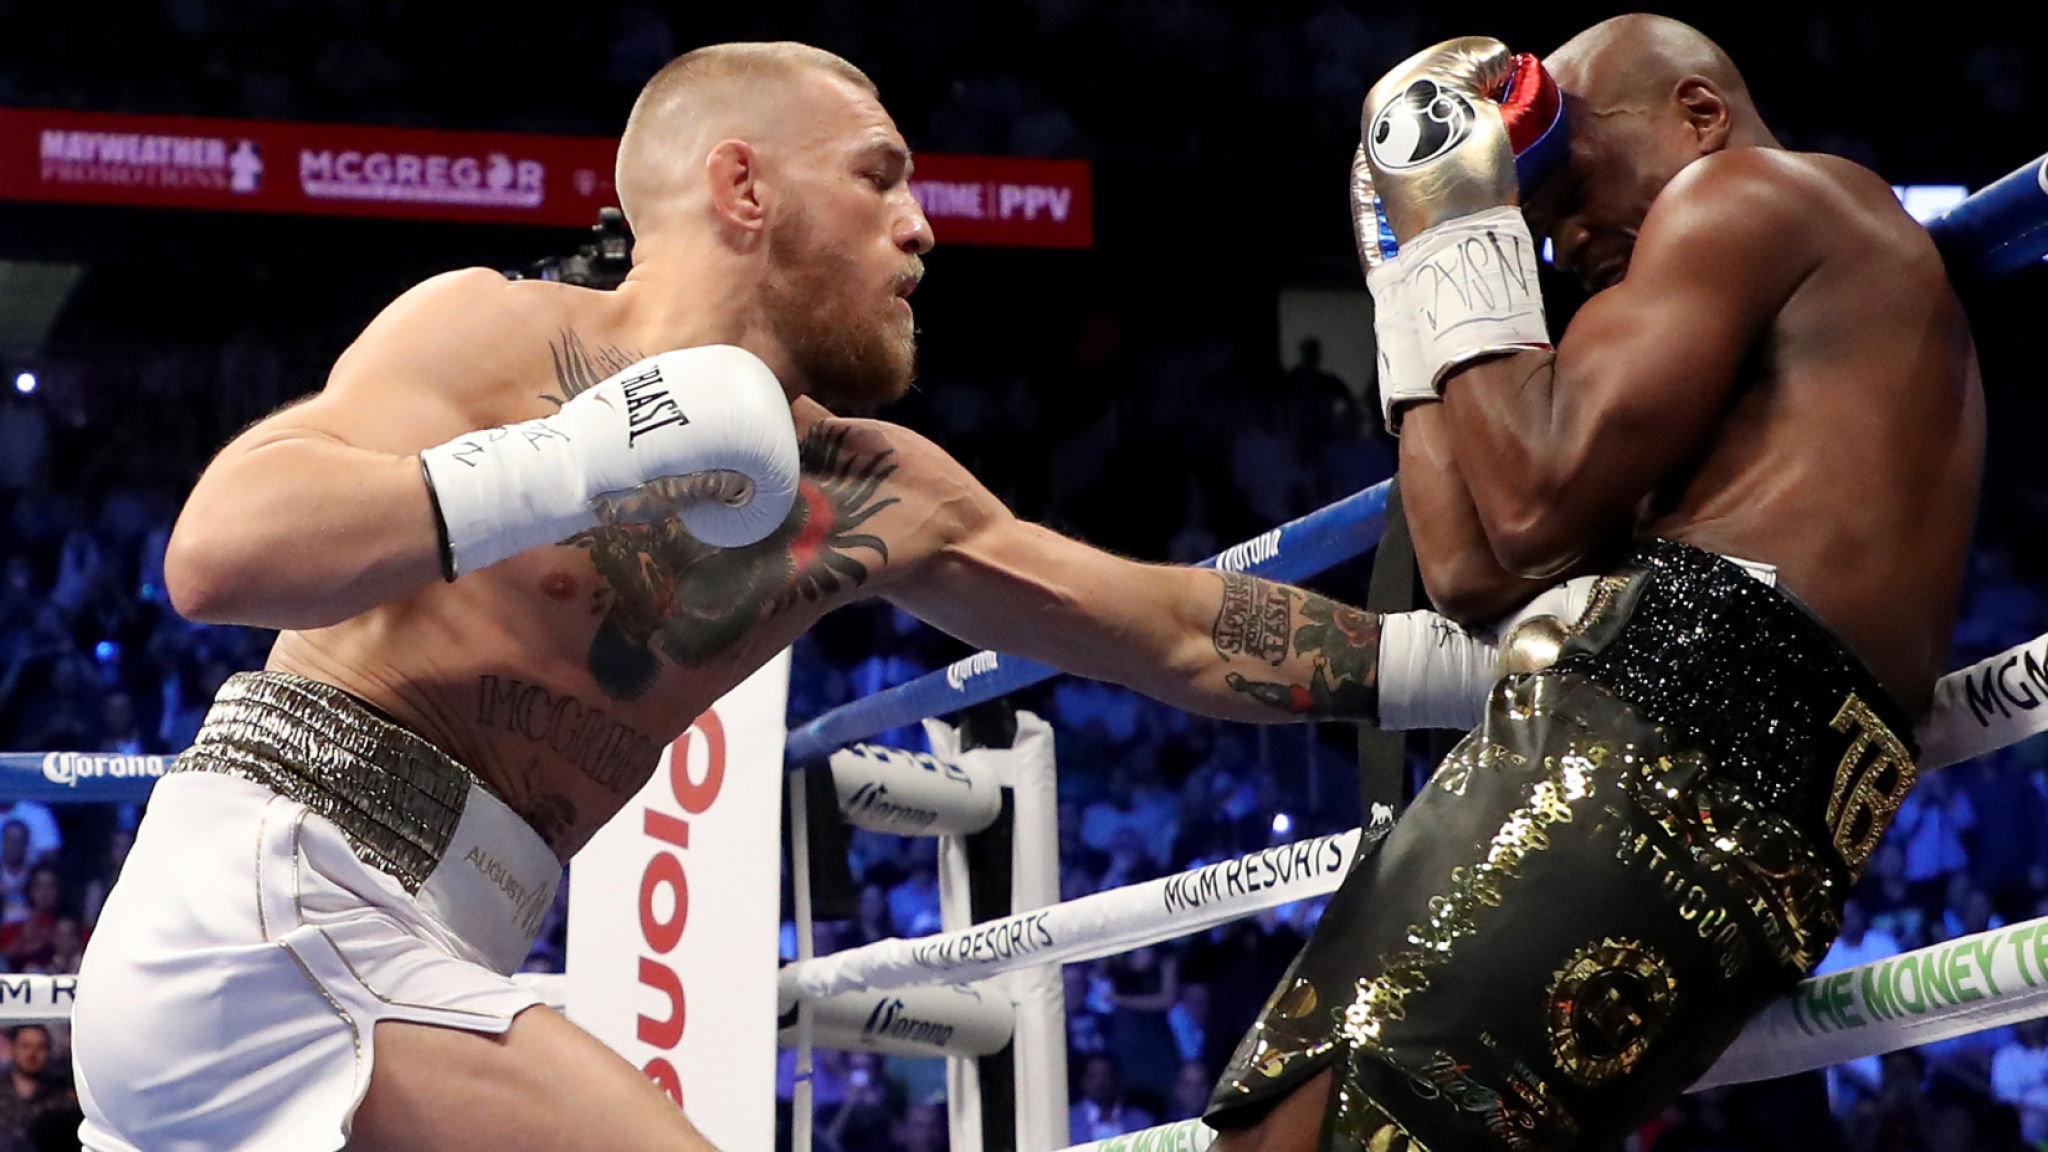 McGregor vs Mayweather Boxing Match